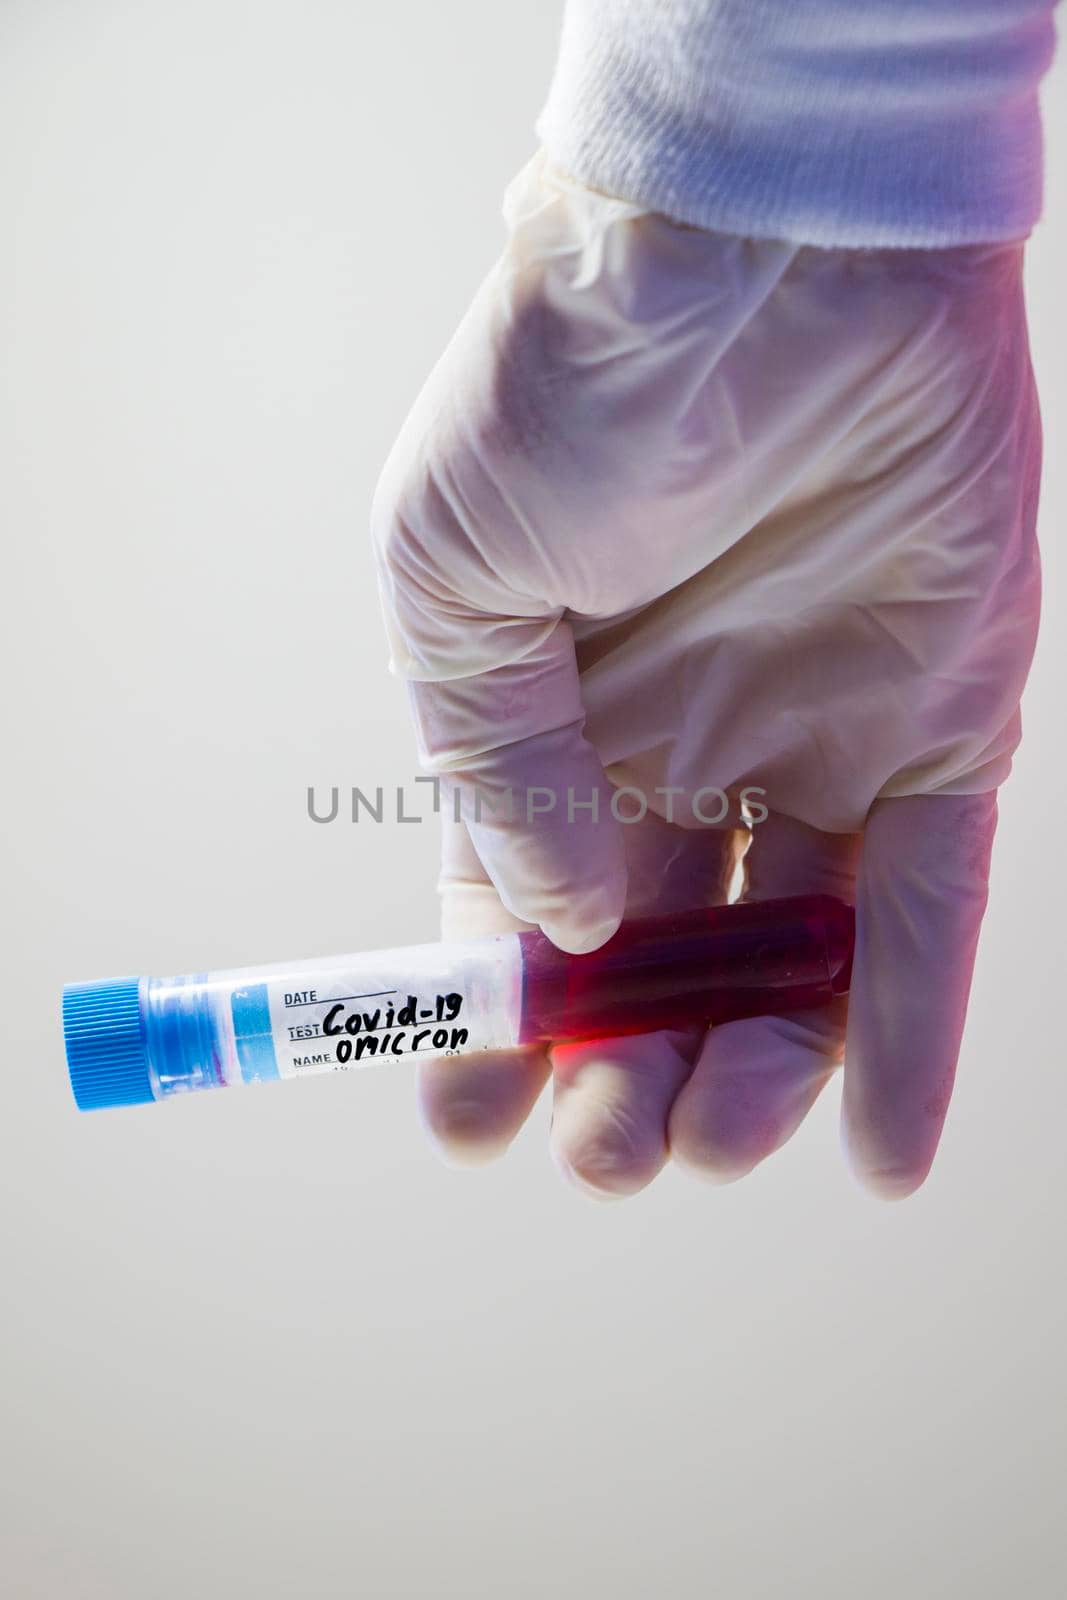 Omicron, corona virus variation. Blood test tube and doctors hand